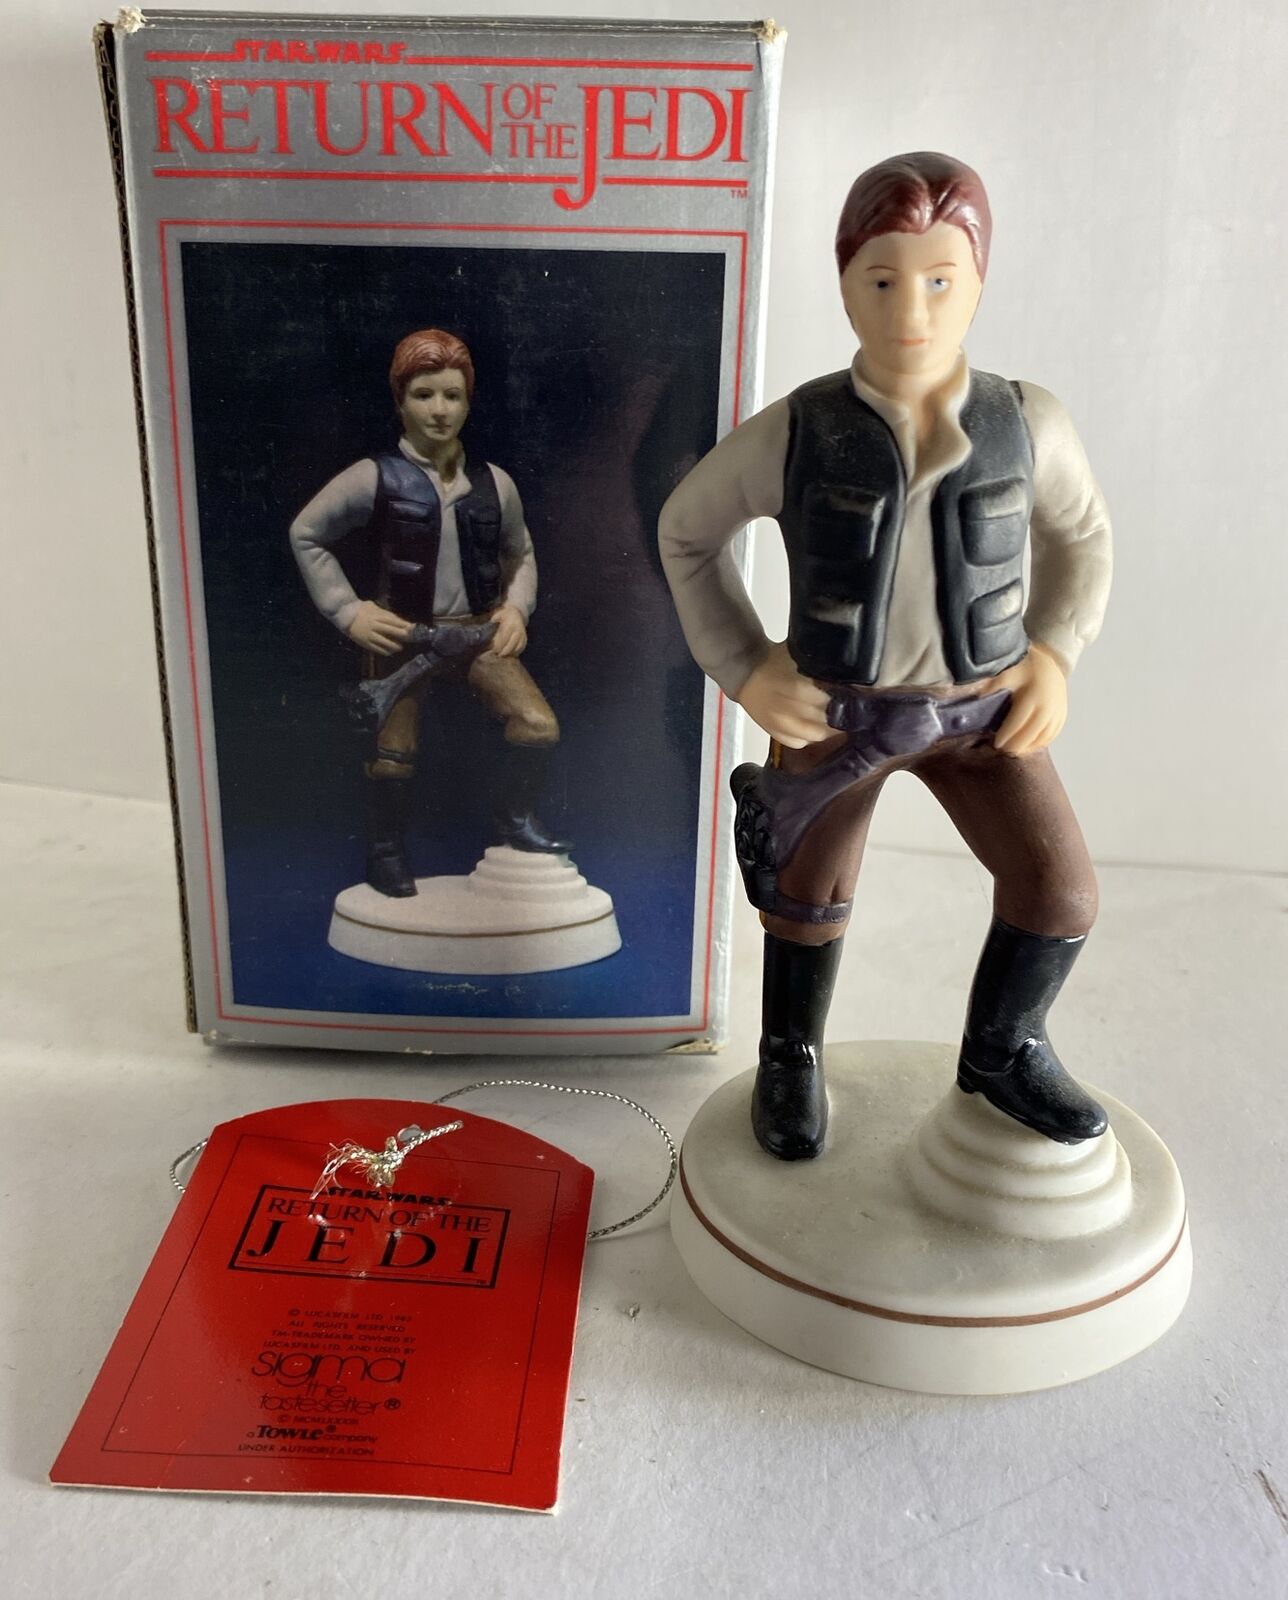 Star Wars Return of the Jedi - Han Solo - Porcelain Figurine - Towle Sigma 1983